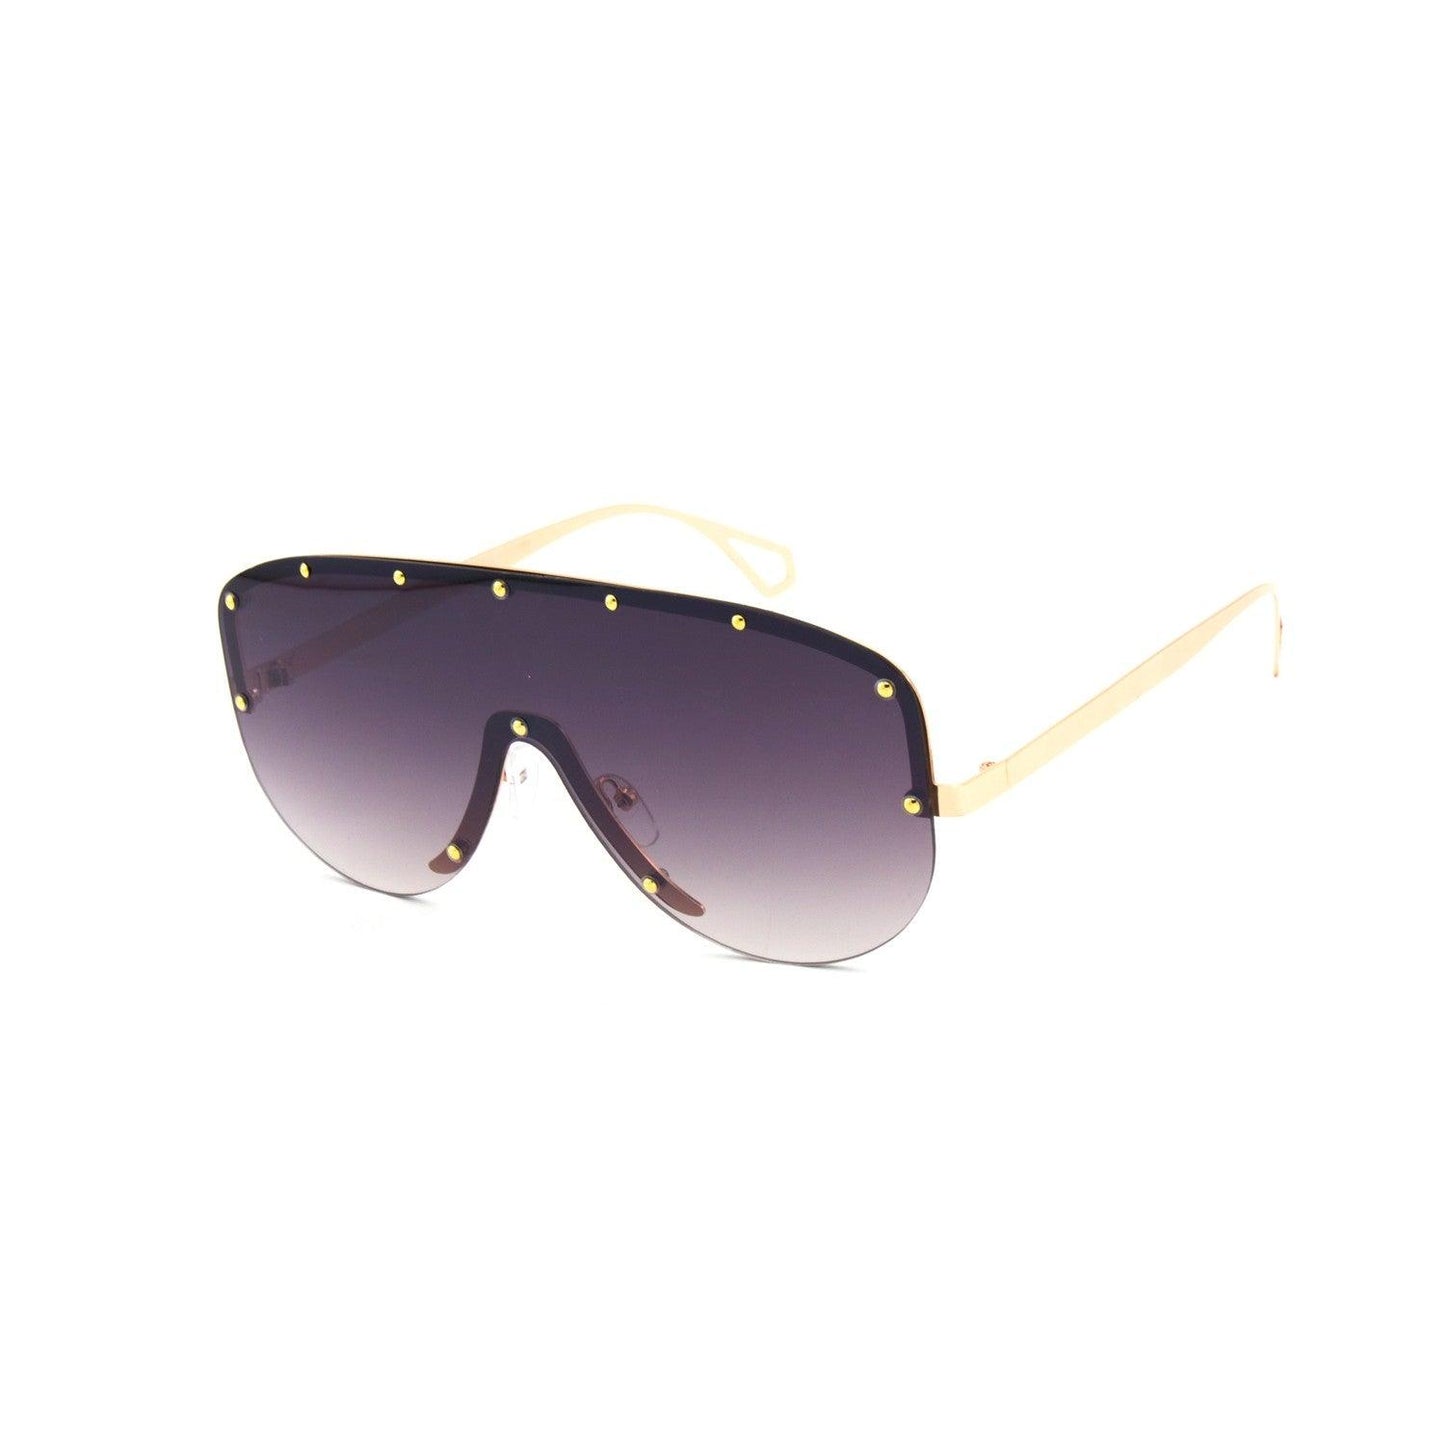 Round Shield Frame Sunglasses - Weekend Shade Sunglasses